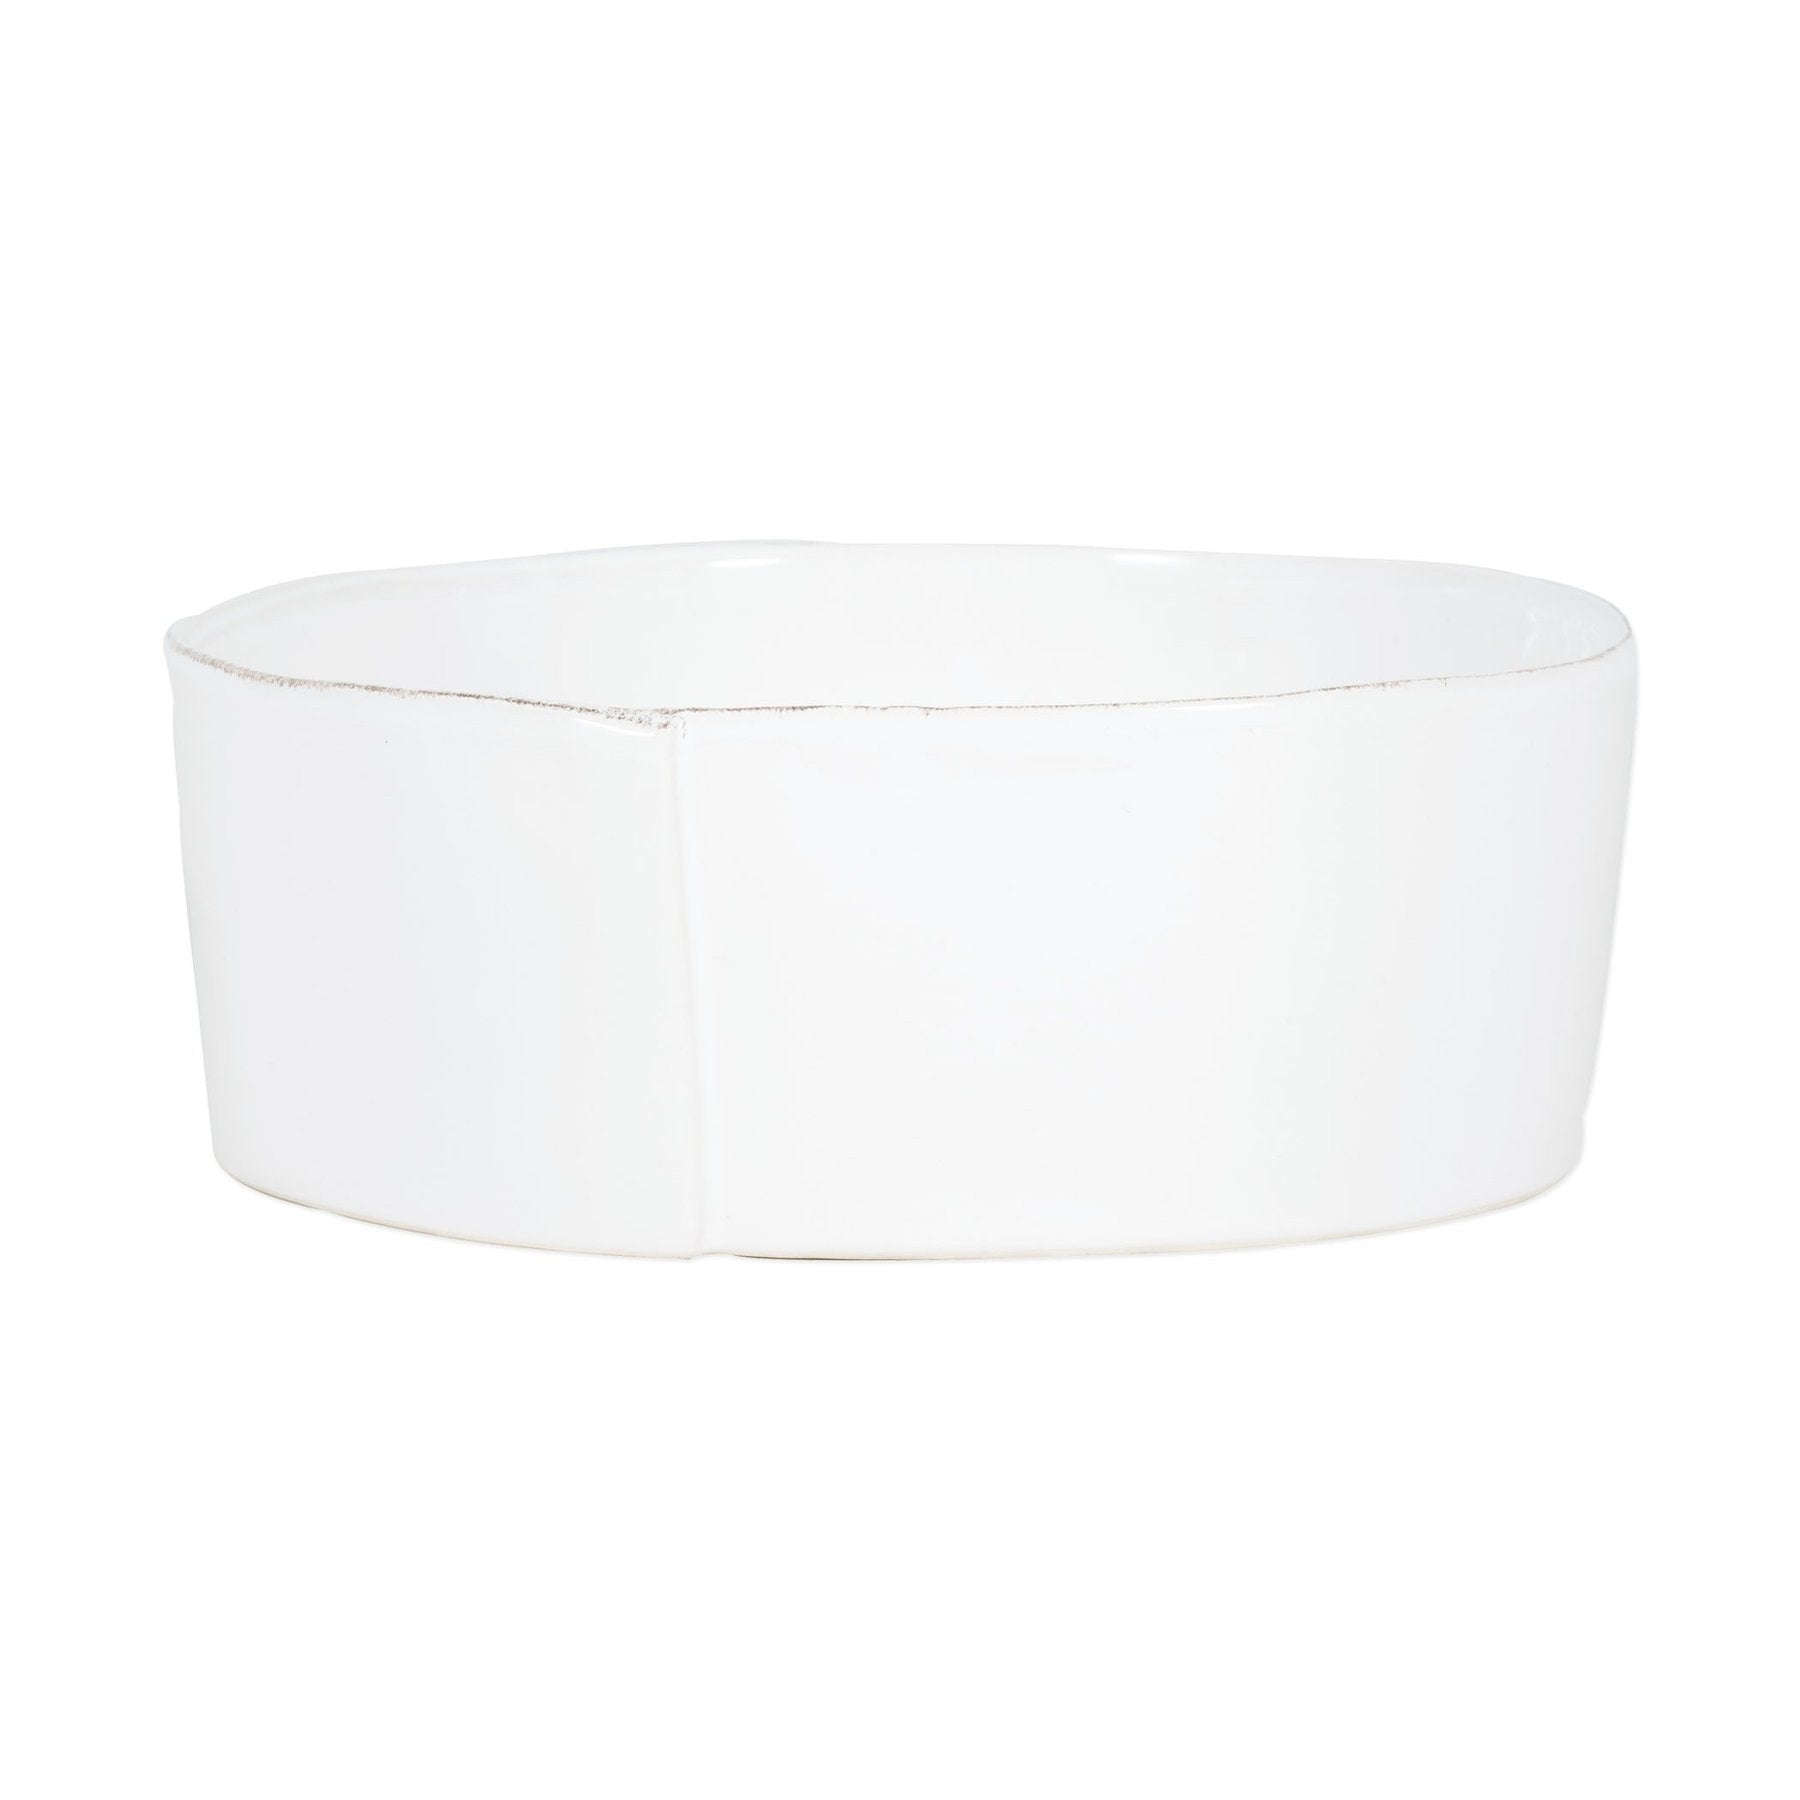 large white serving bowl on white background.